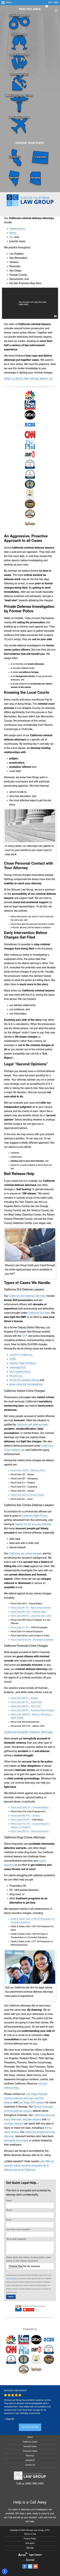 Shouse Law Group - Long Beach CA Lawyers